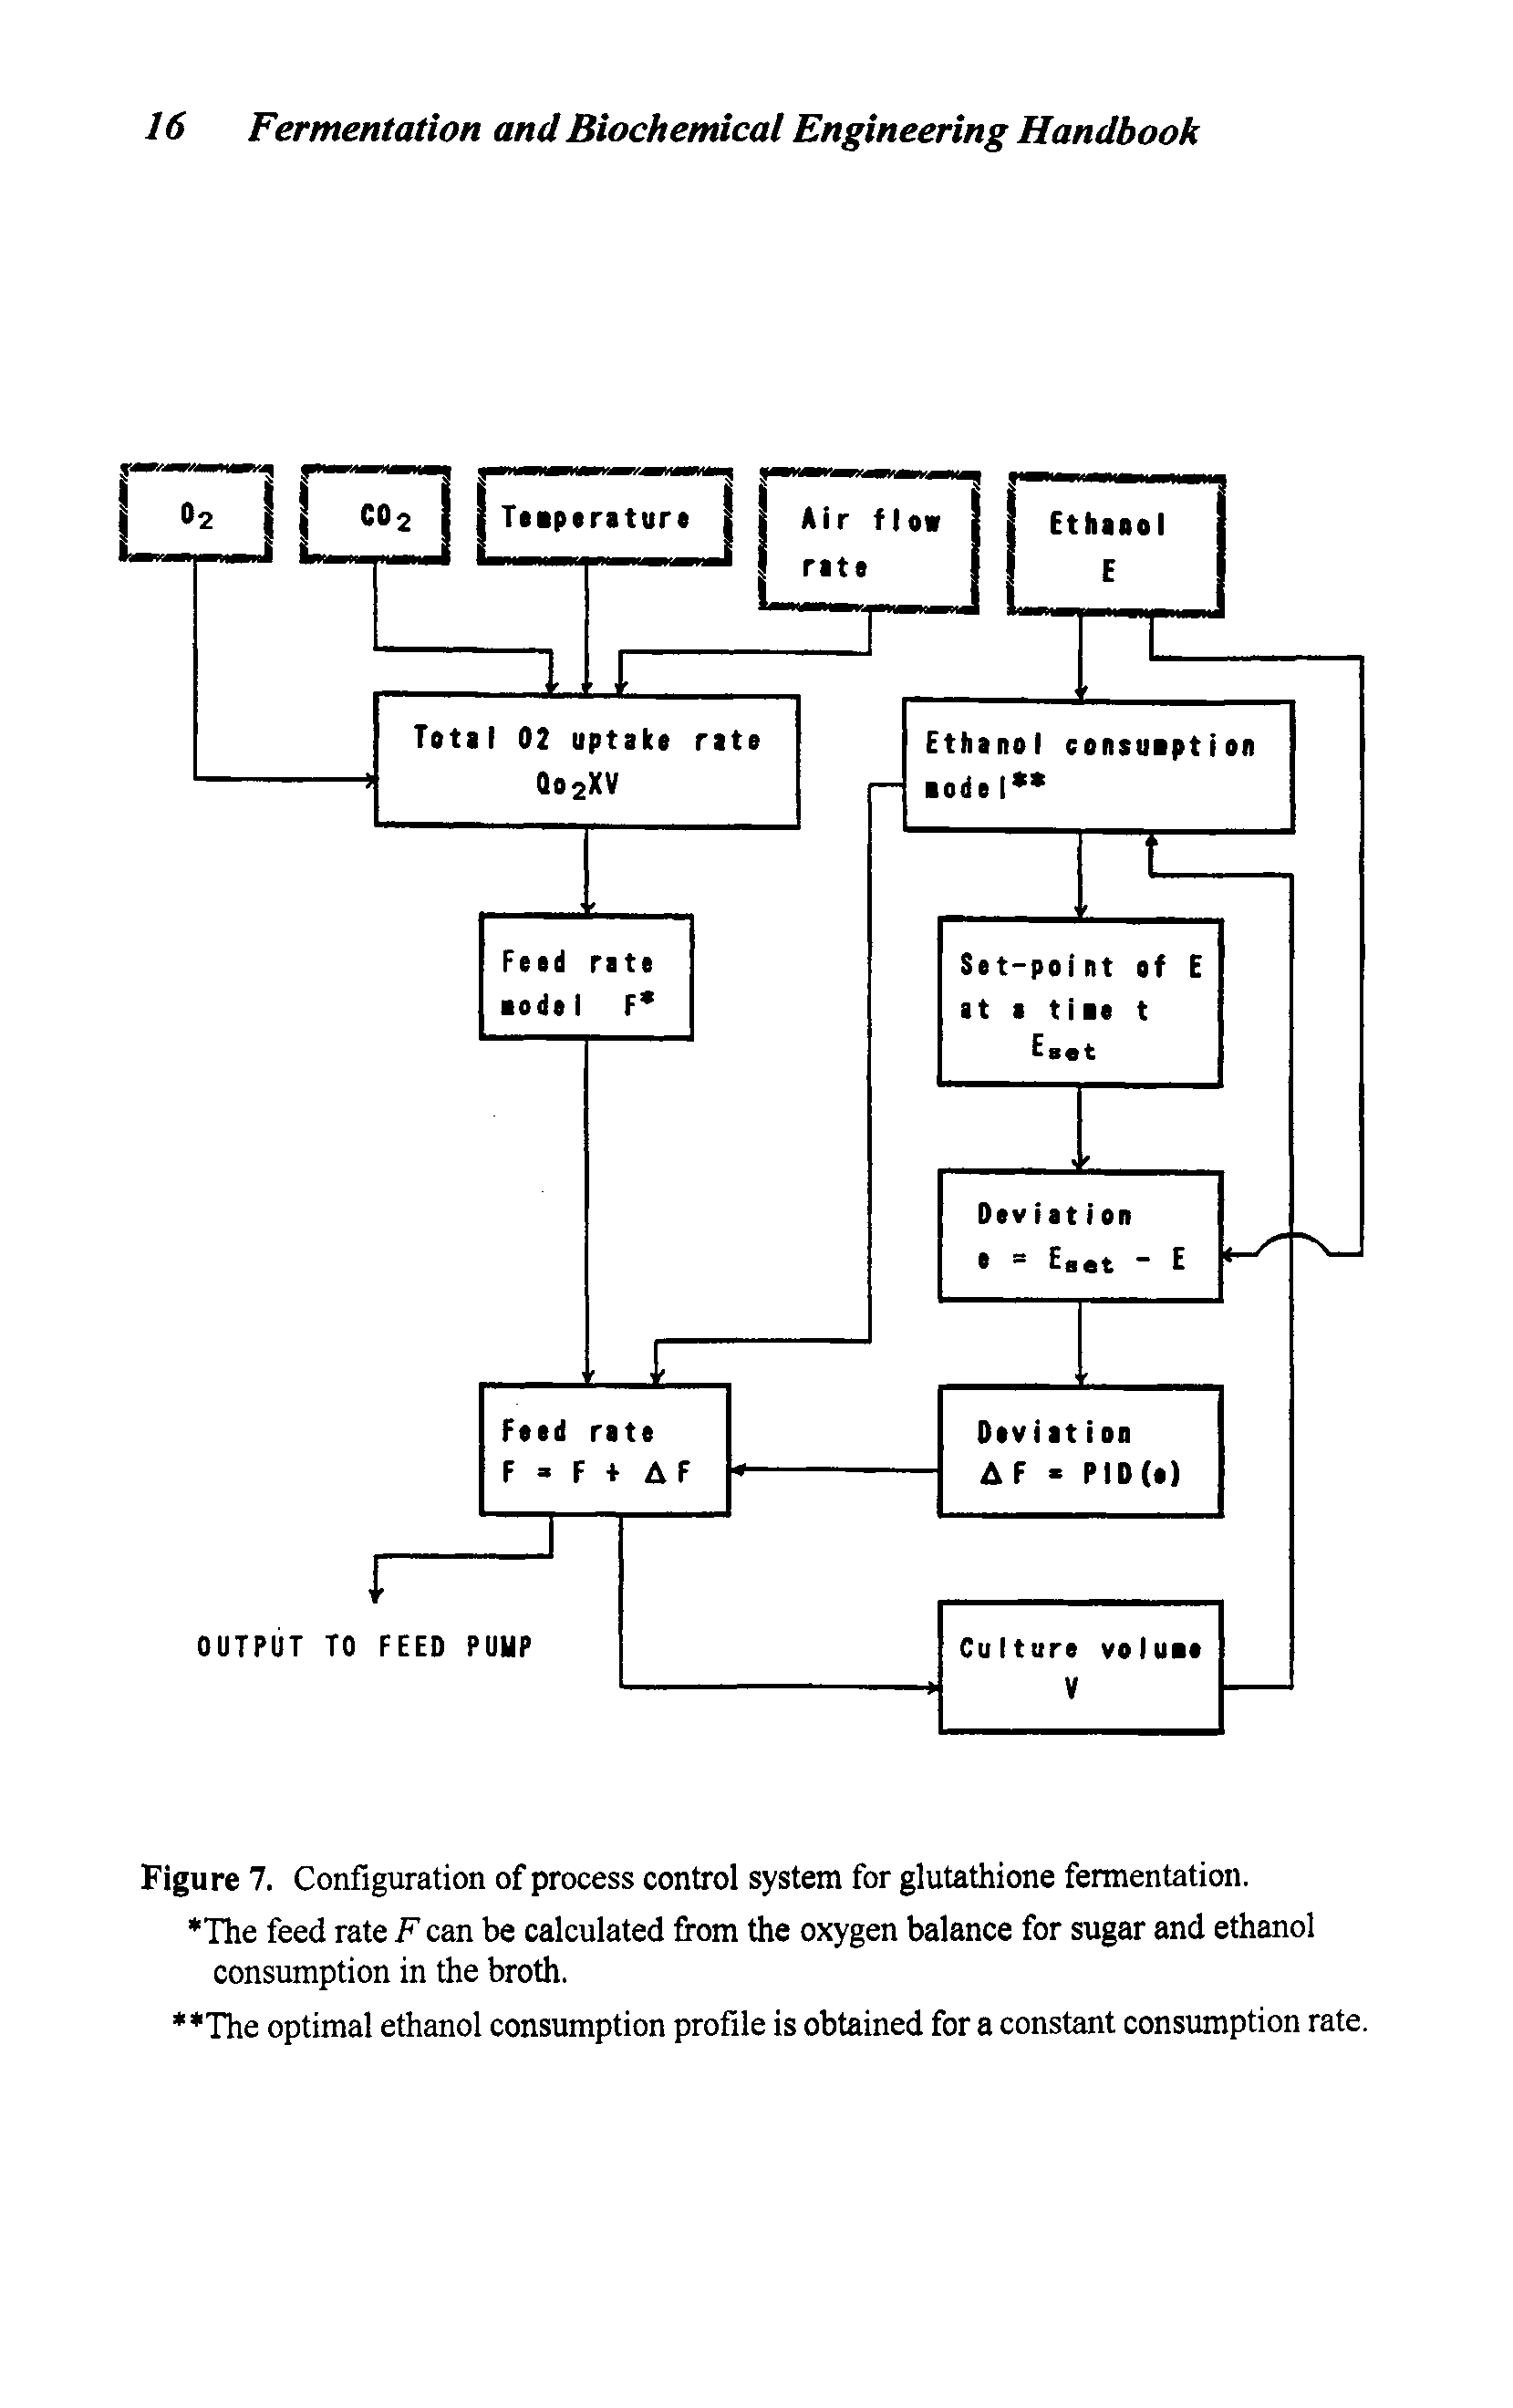 Figure 7. Configuration of process control system for glutathione fermentation.